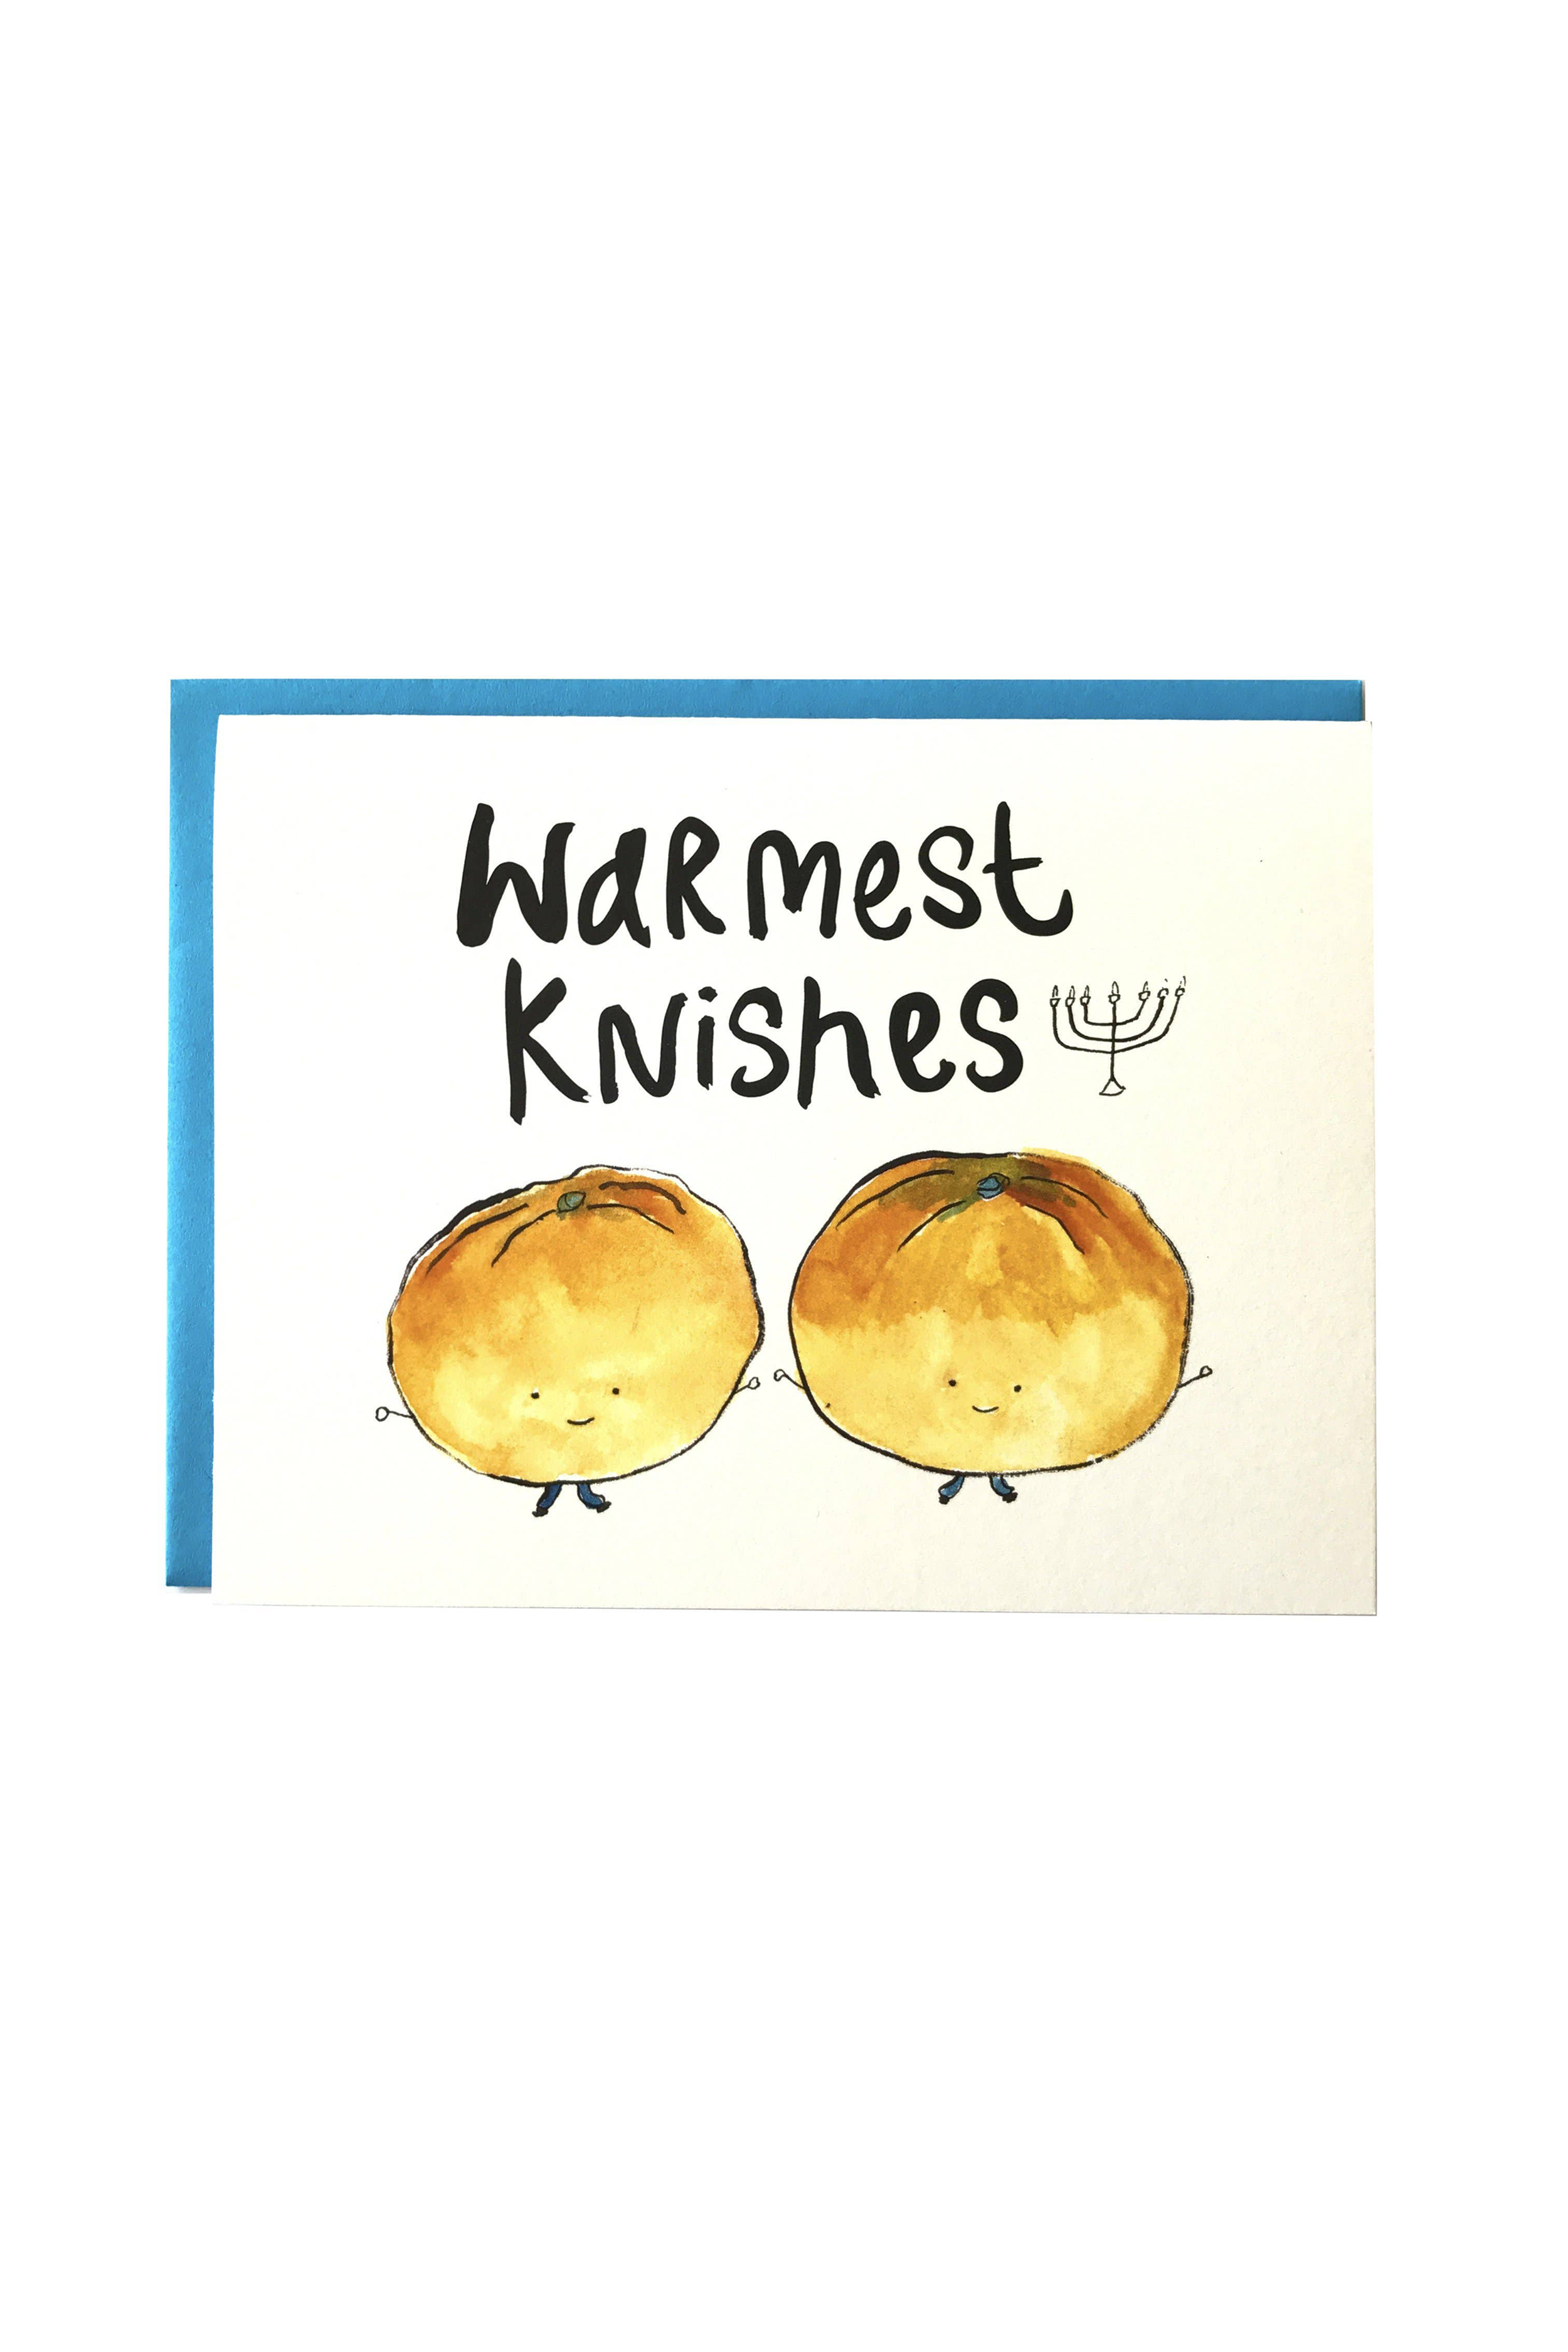 Warmest Knishes Hanukkah Card